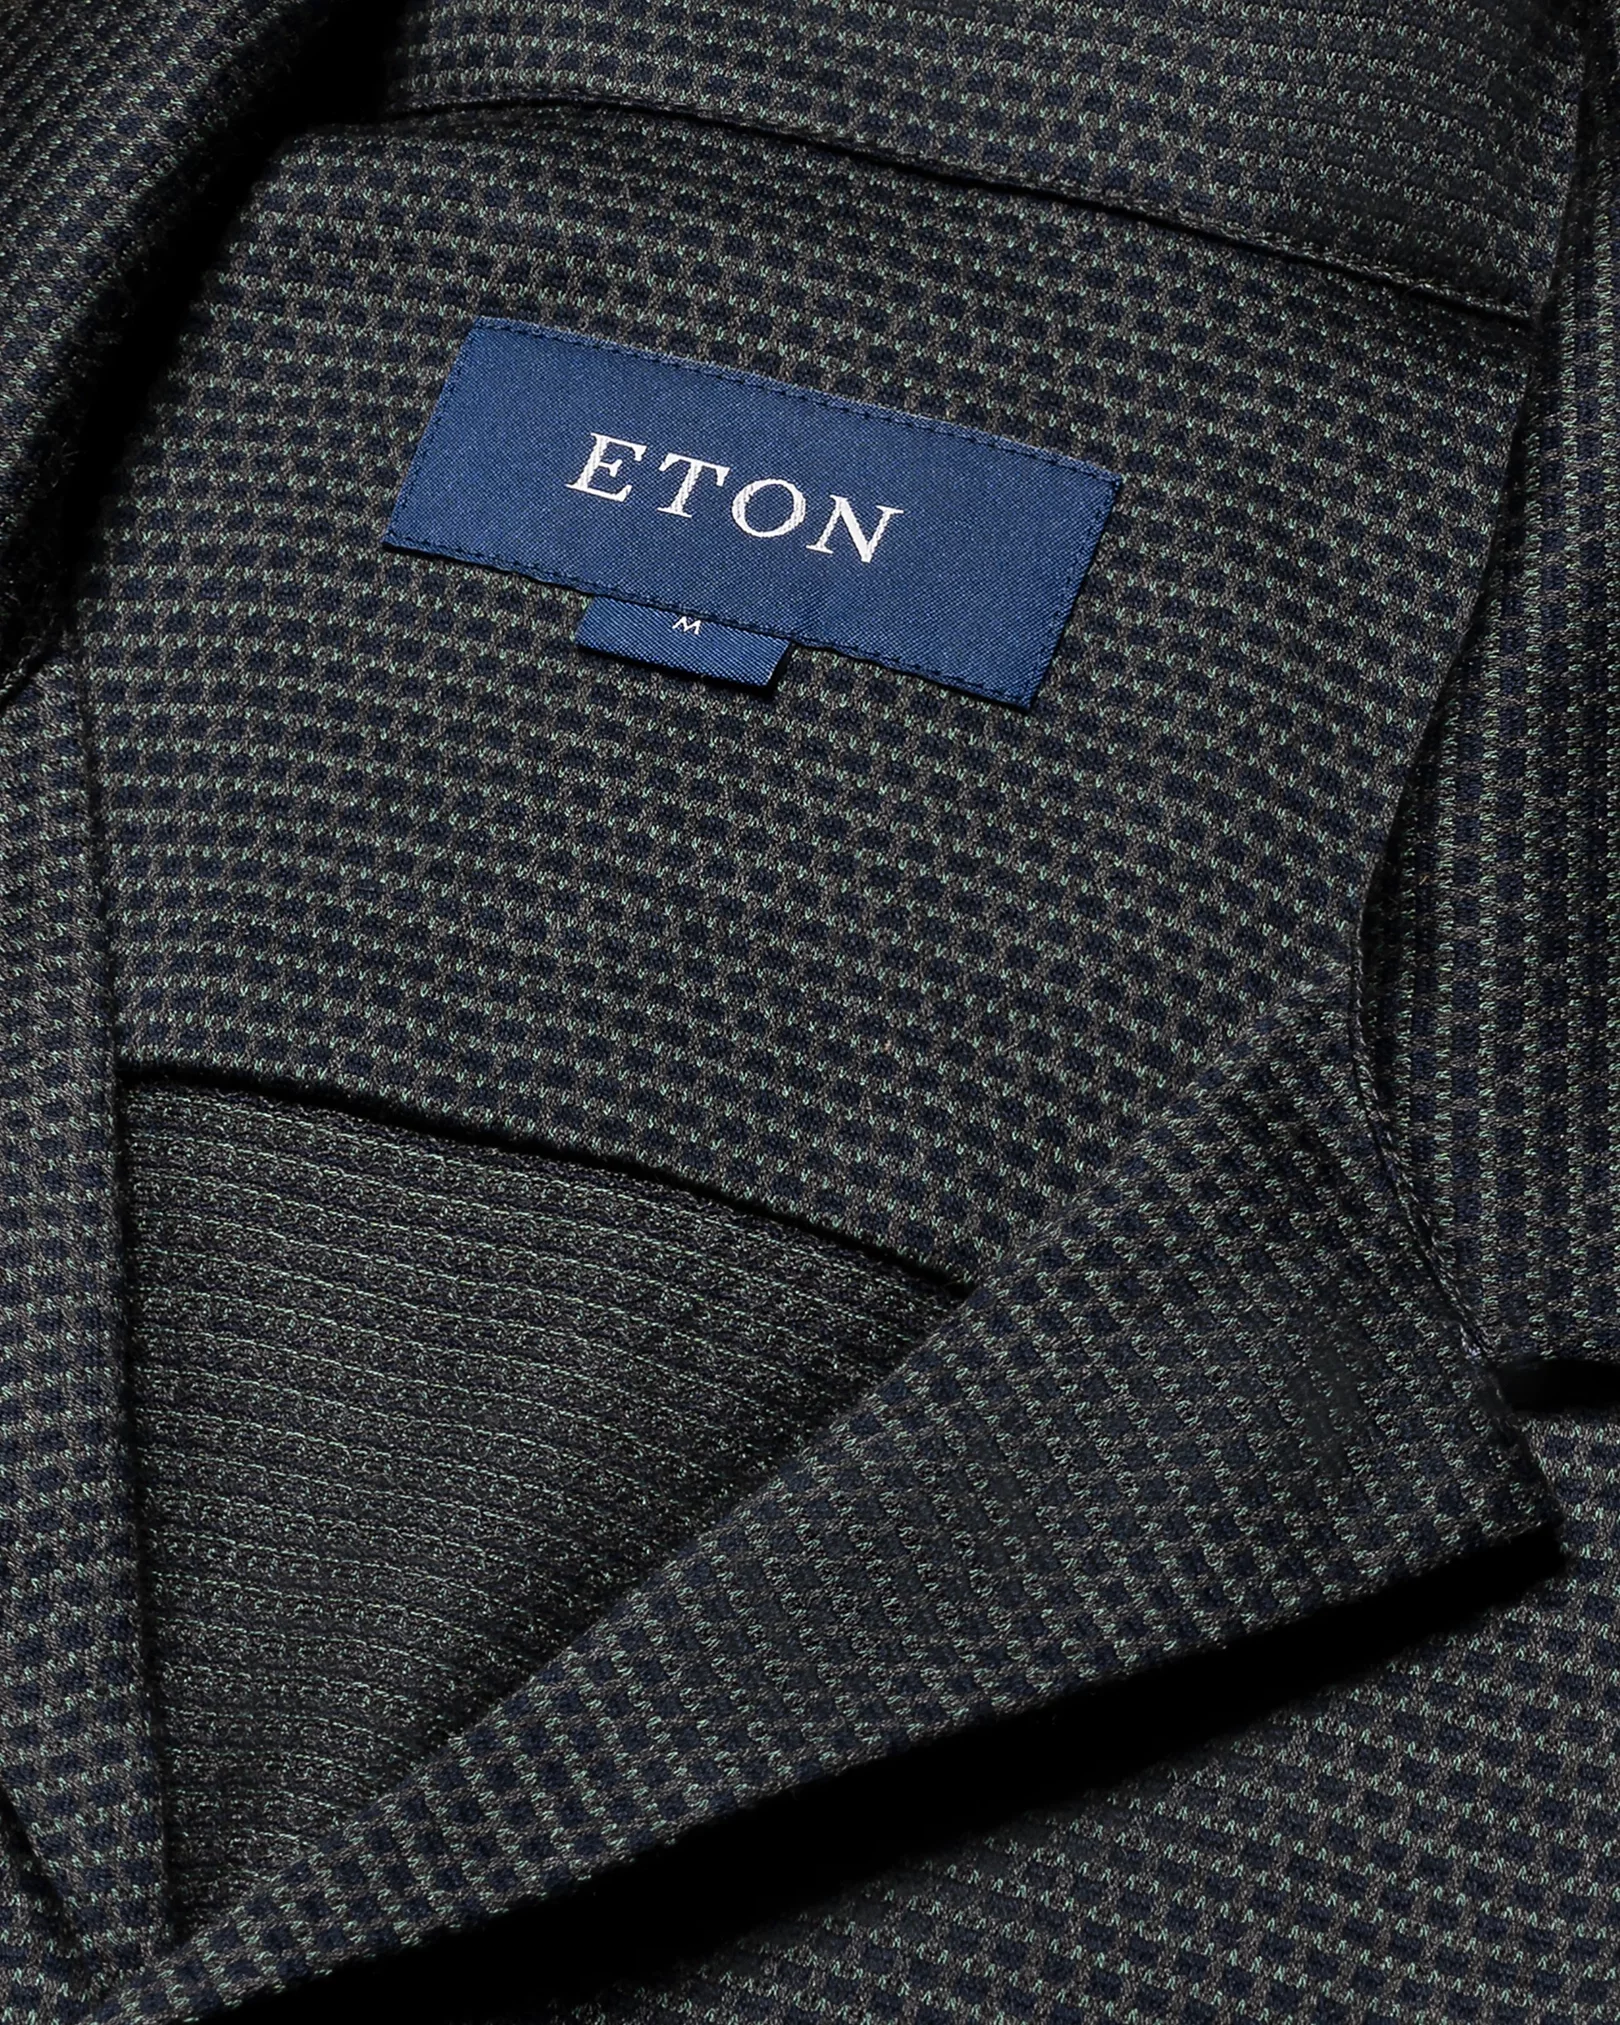 Eton - navy blue knitted jersey long sleeve